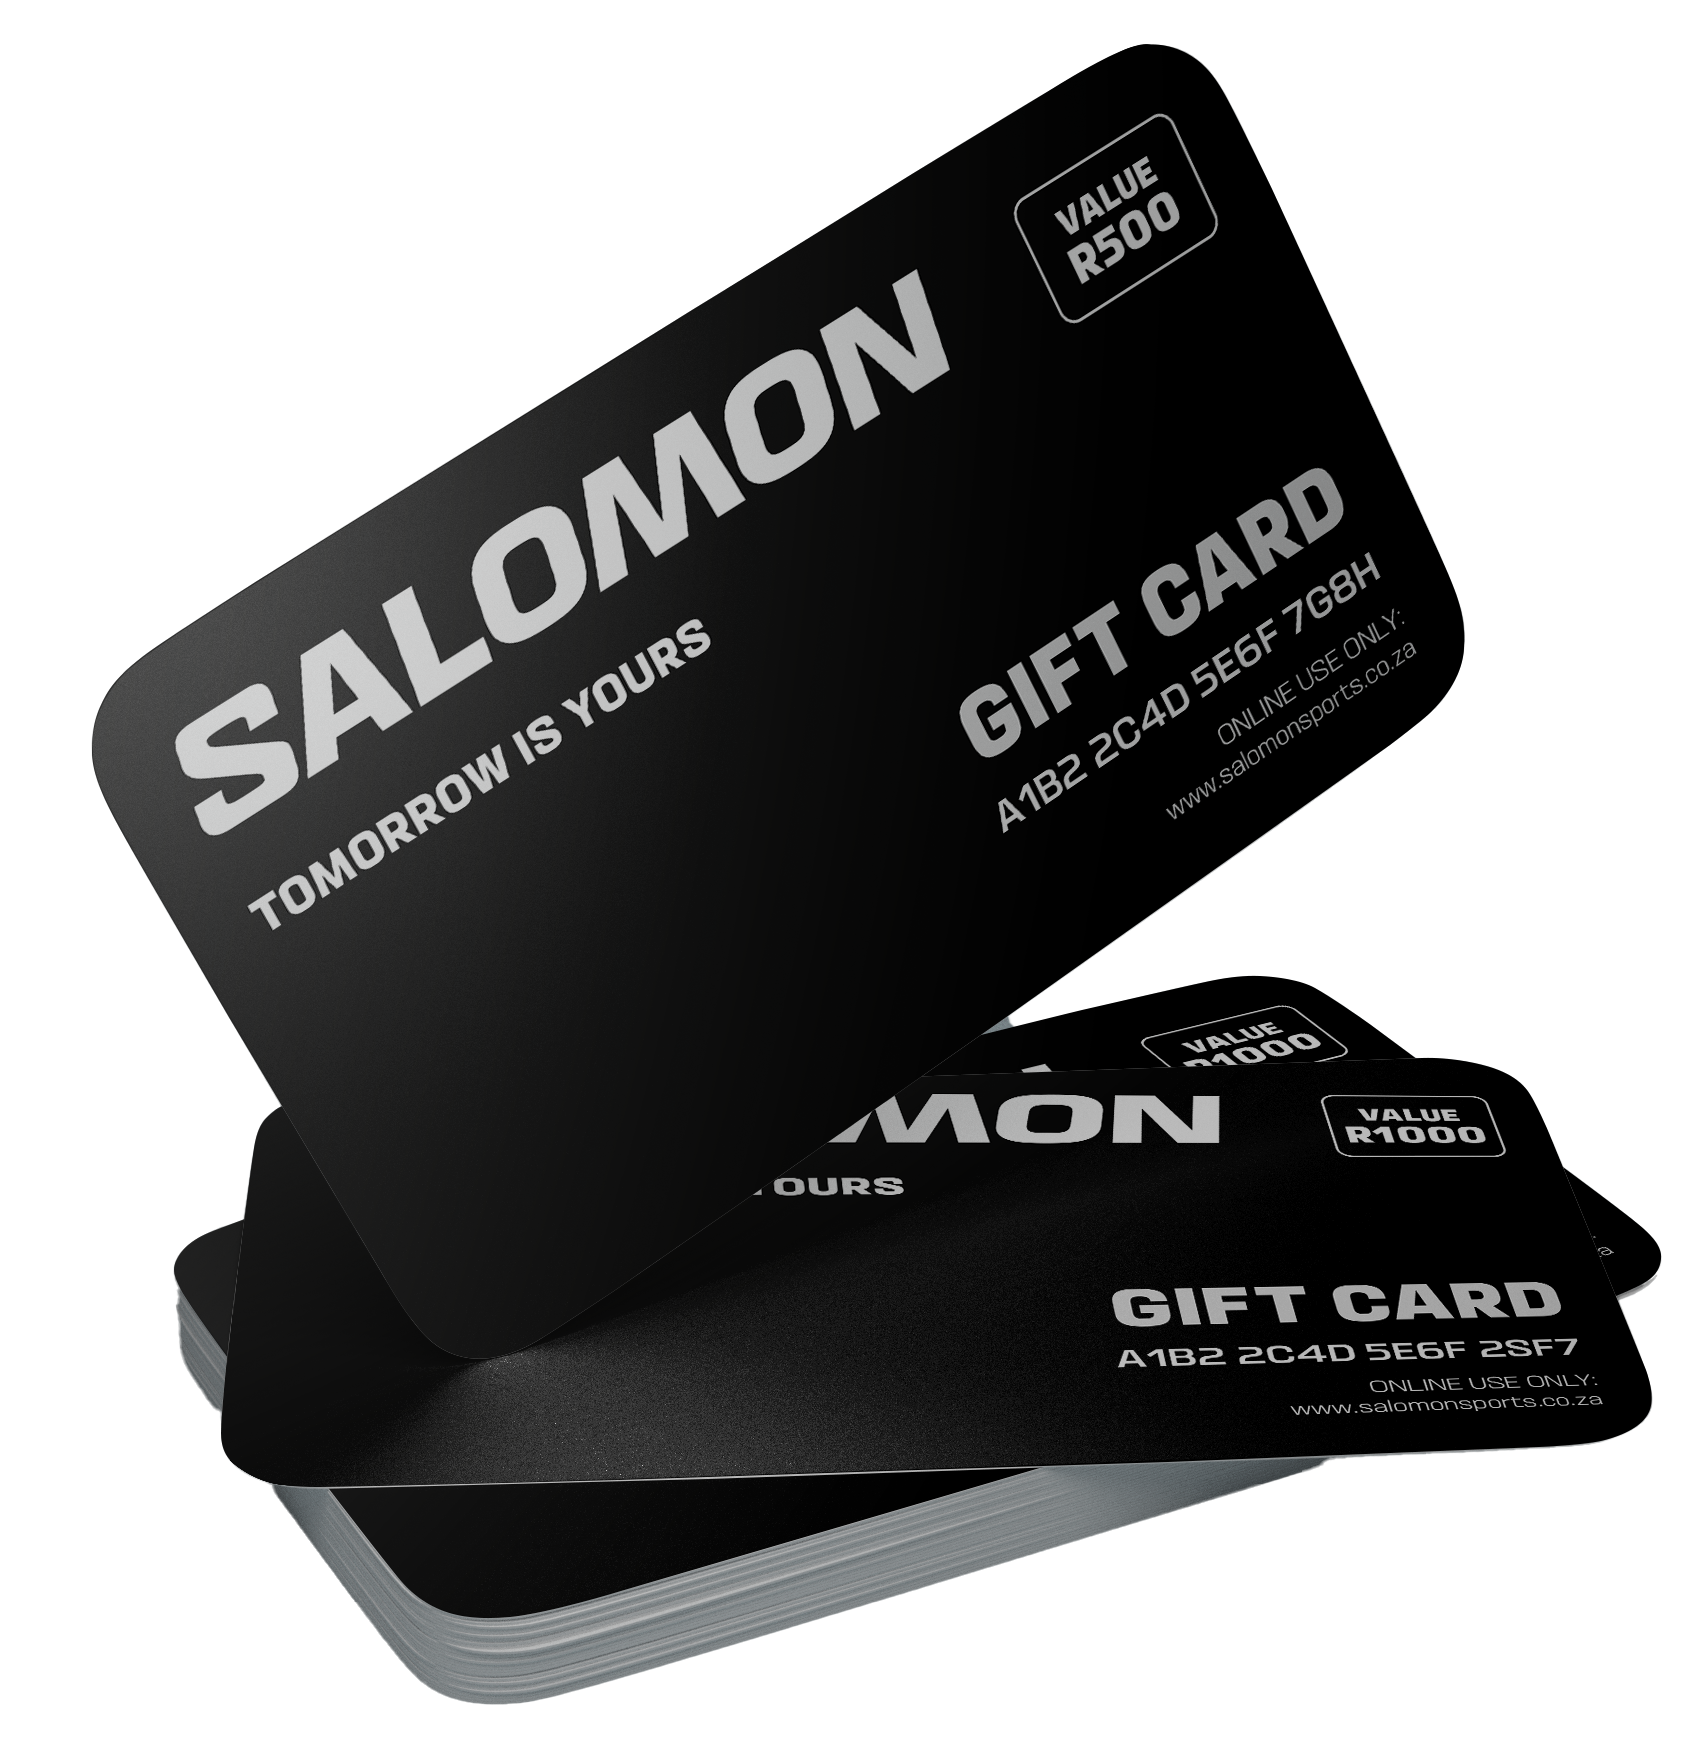 SALOMON GIFT CARD